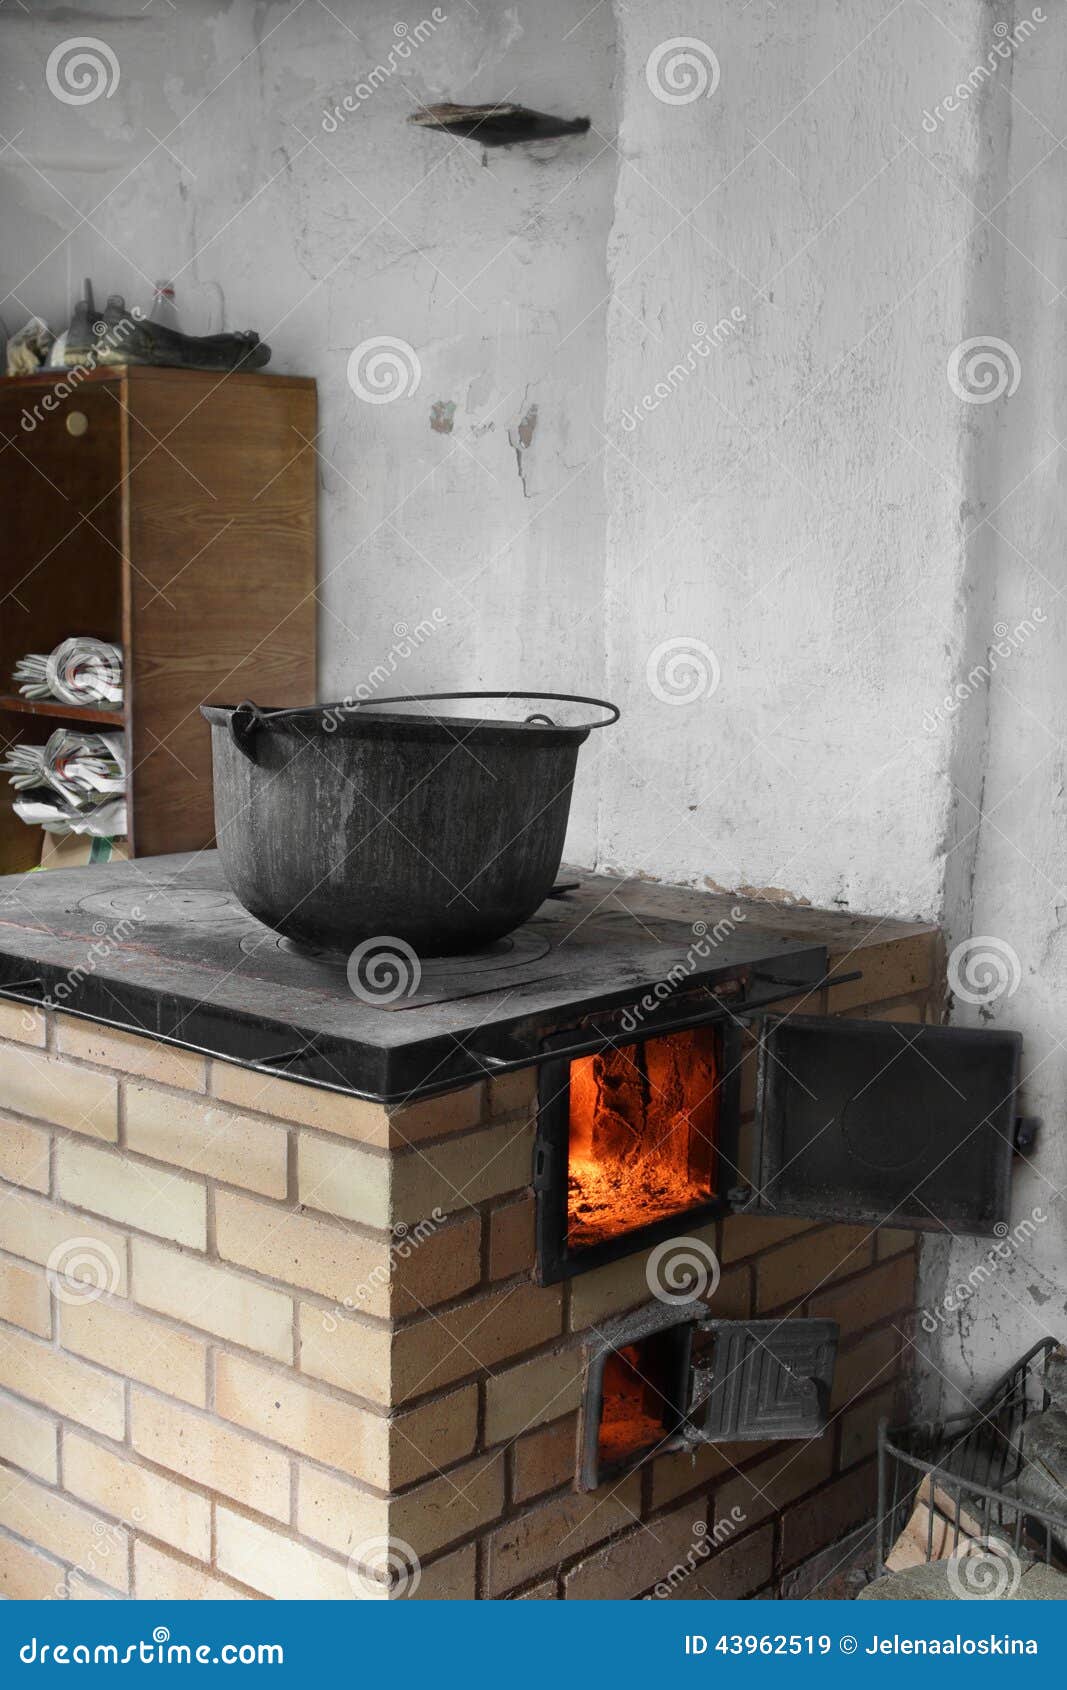 Wood stove business plan